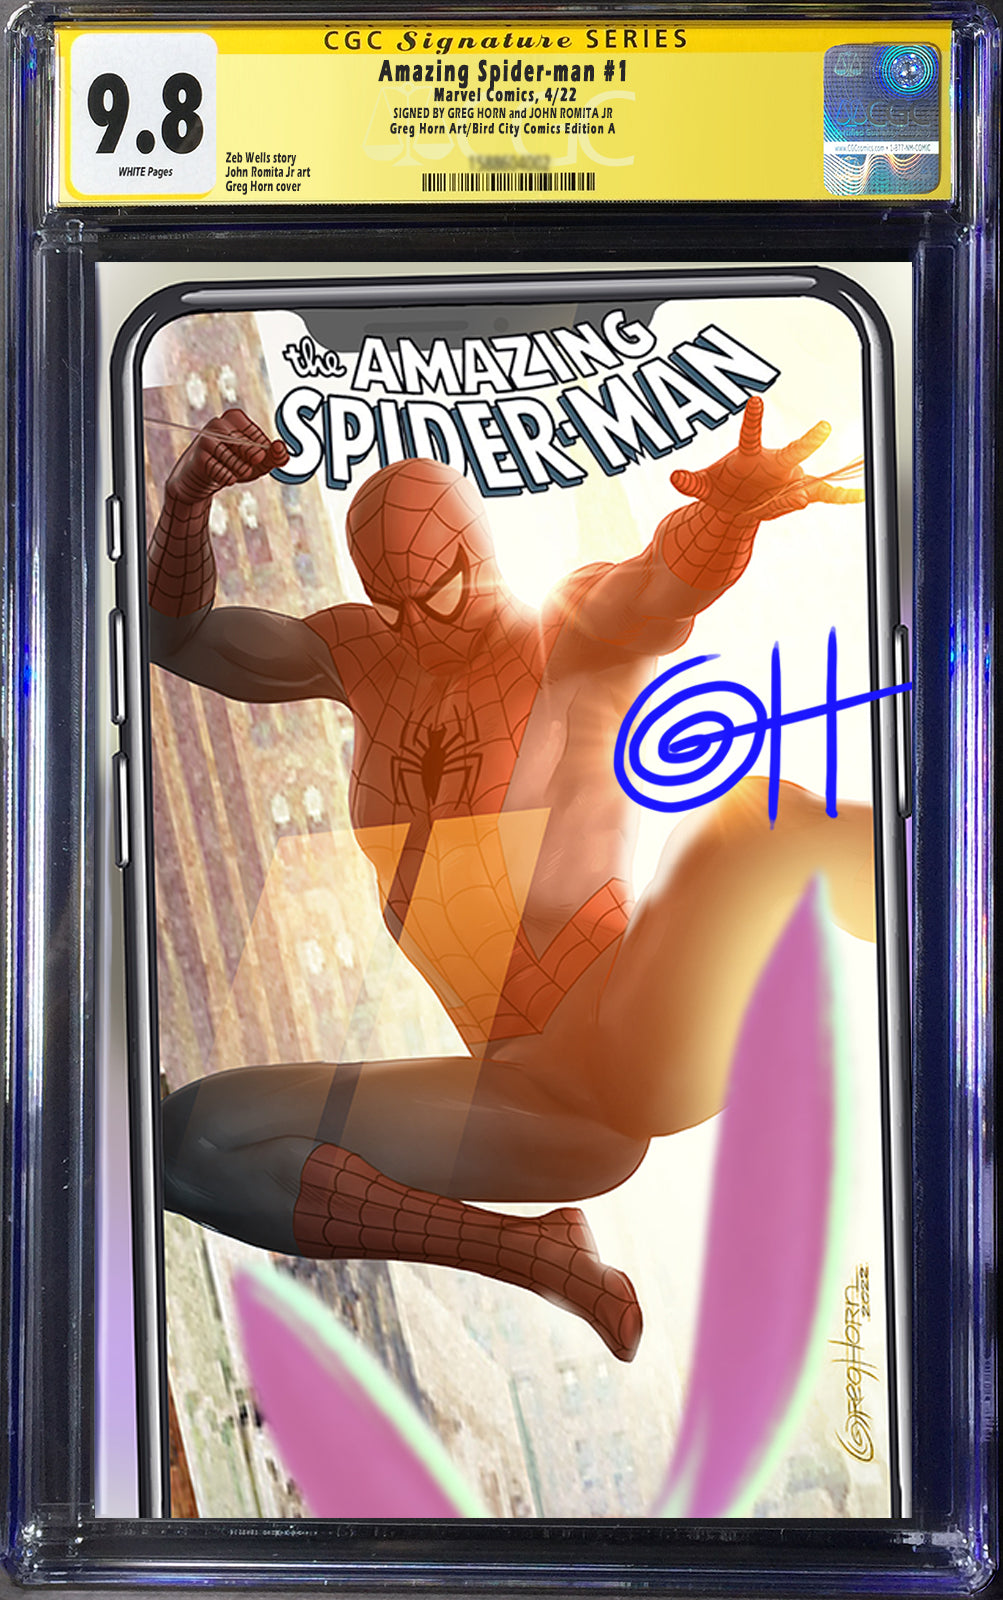 Amazing Spider-Man # 1 - A Bird City Comic/Greg Horn Art Exclusive Variant - CGC Signature Series Graded Options